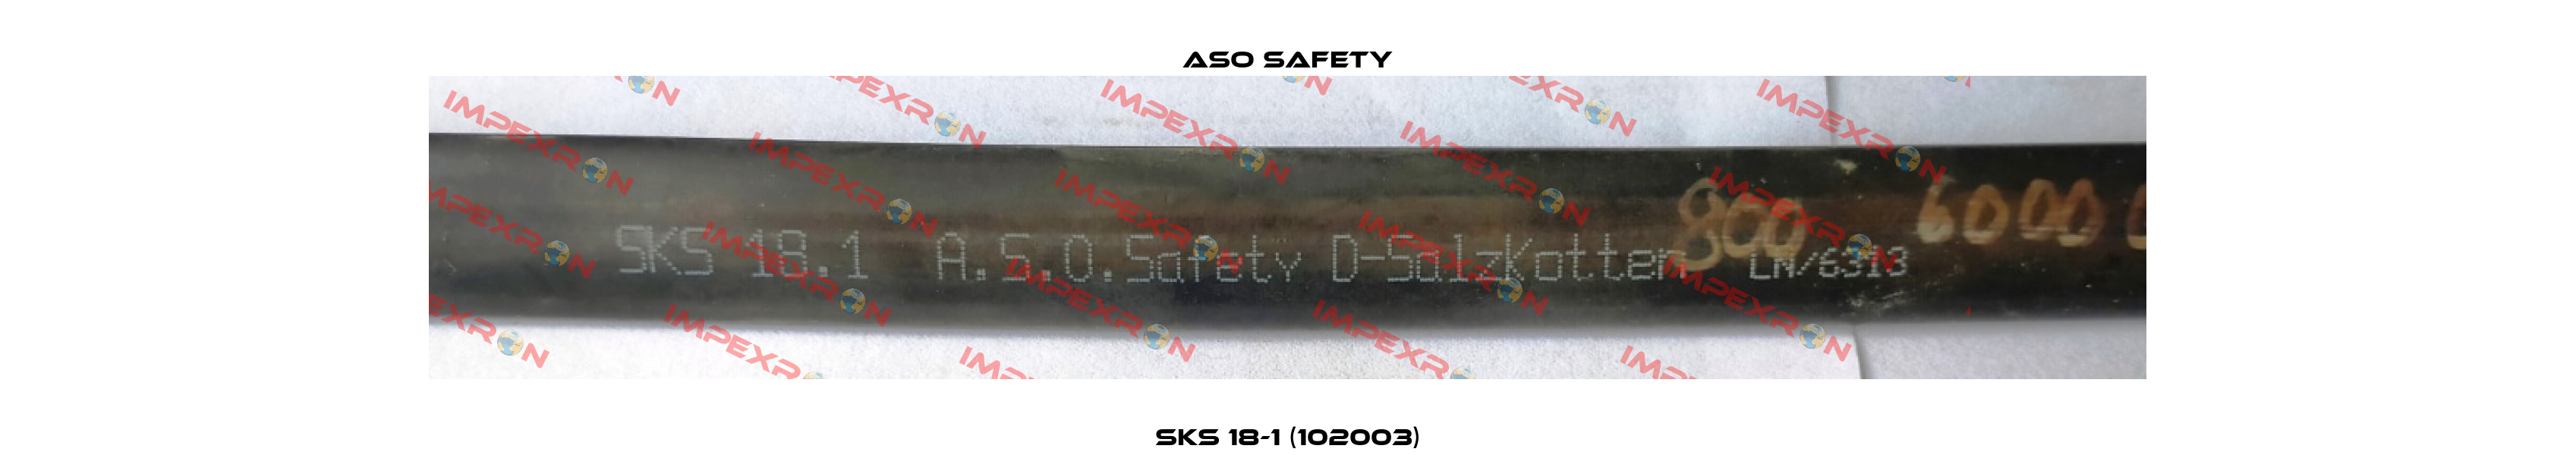 SKS 18-1 (102003) ASO SAFETY